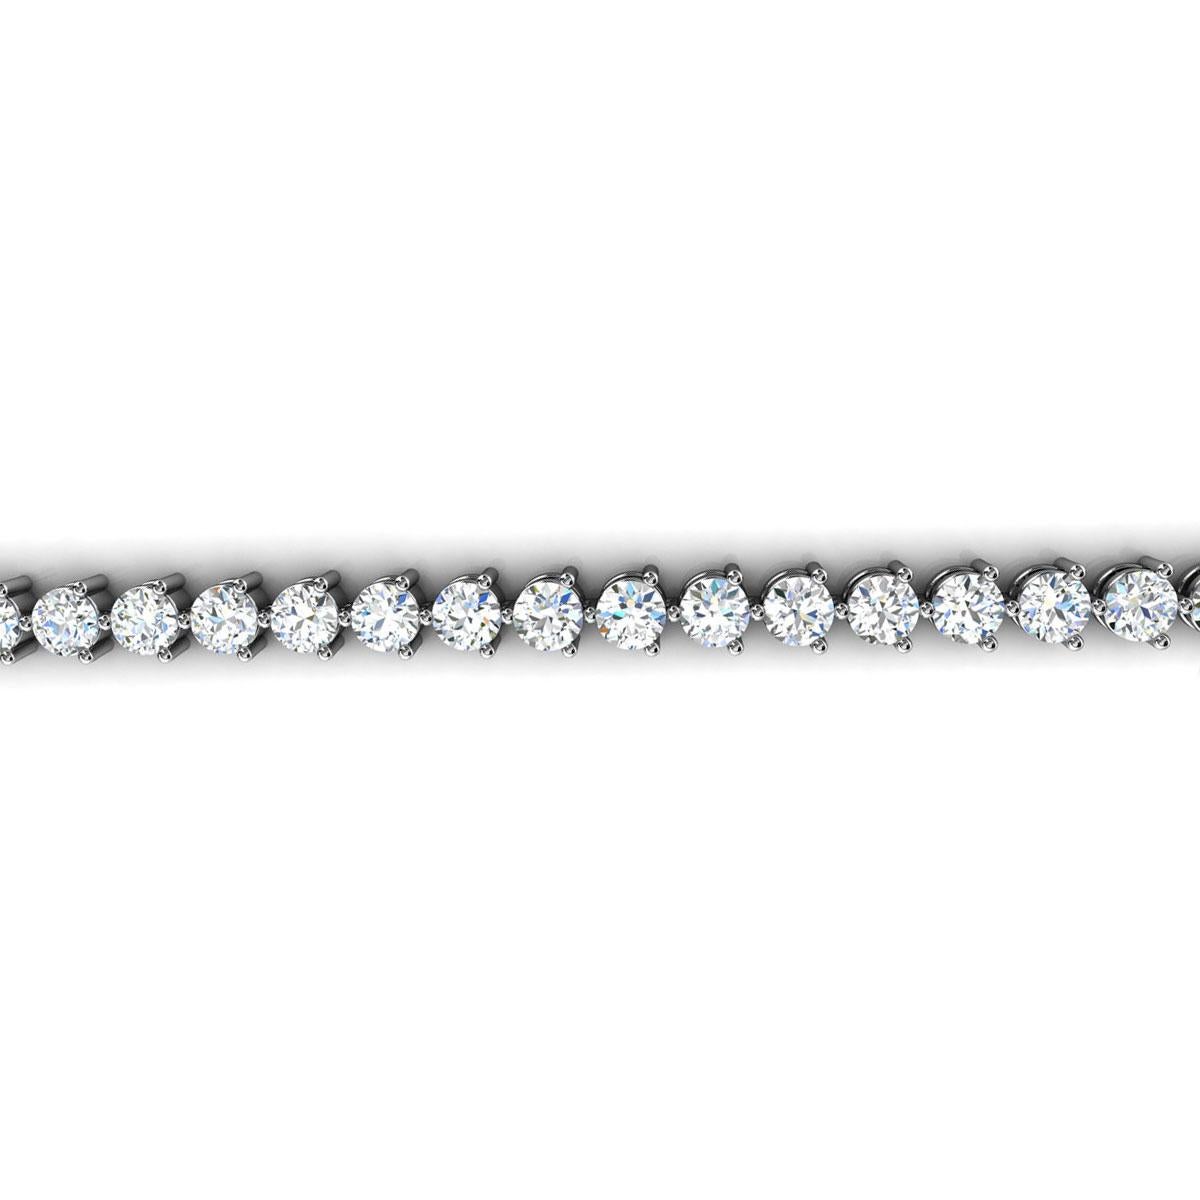 7 carat diamond tennis bracelet